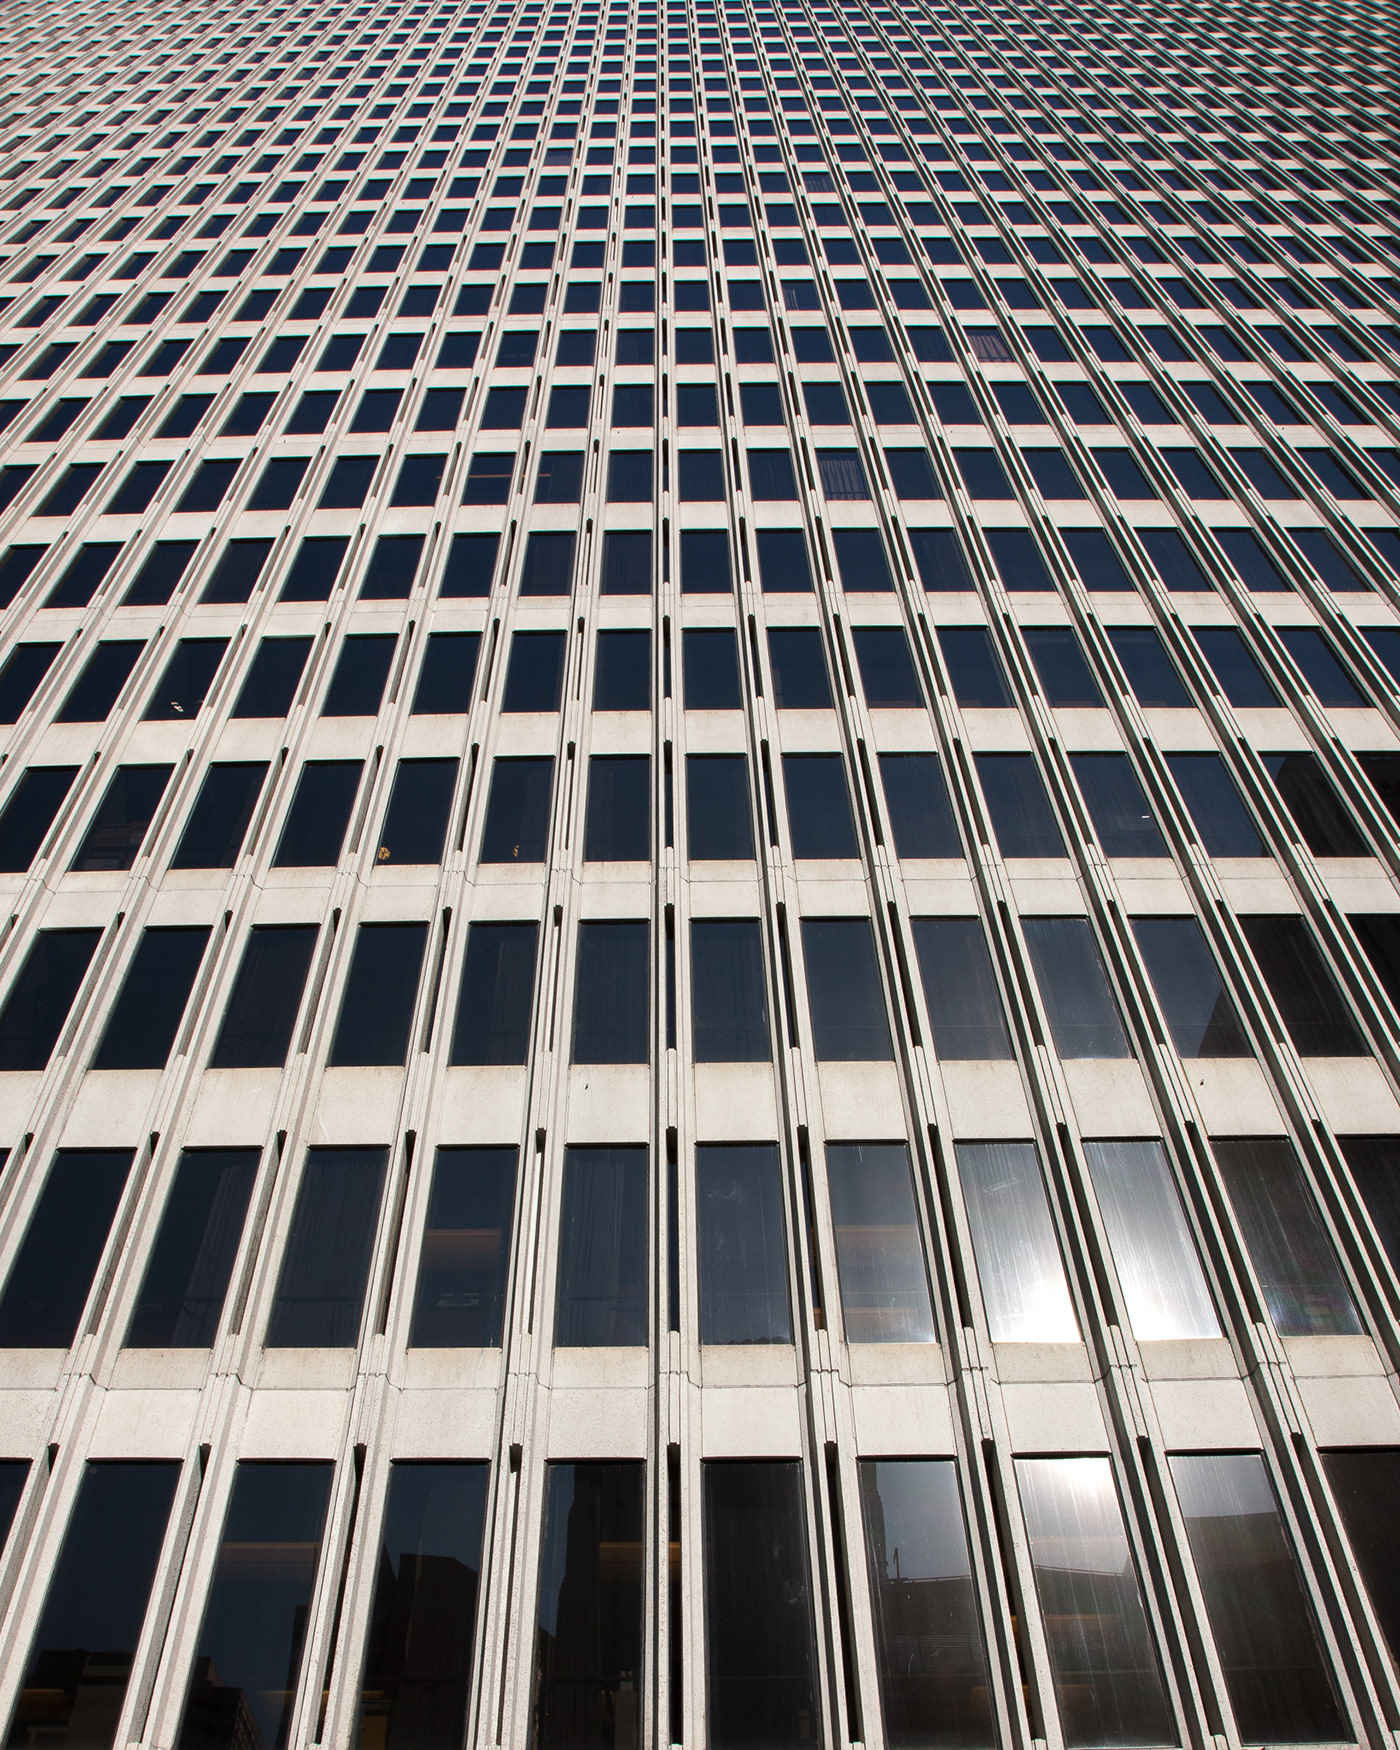 architecture buildings contemporary architecture geometric grids minimal modern architecture pattern skyscraper texture